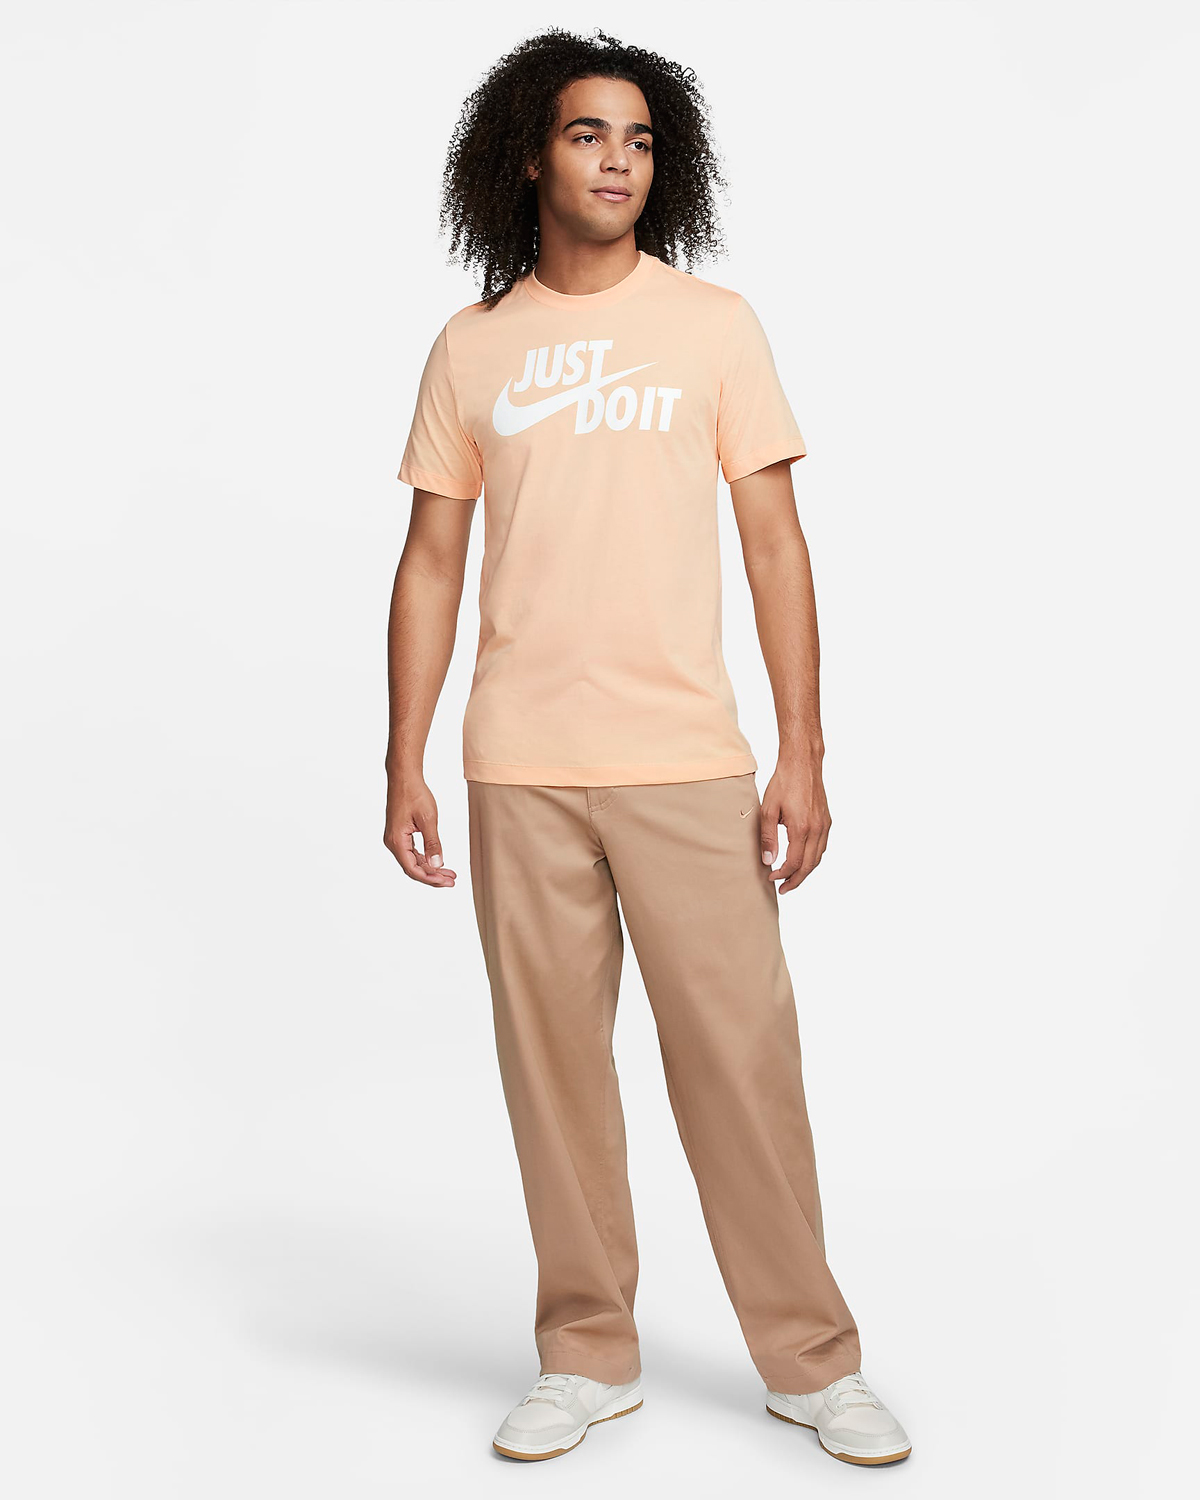 Nike-Sportswear-JDI-T-Shirt-Ice-Peach-1